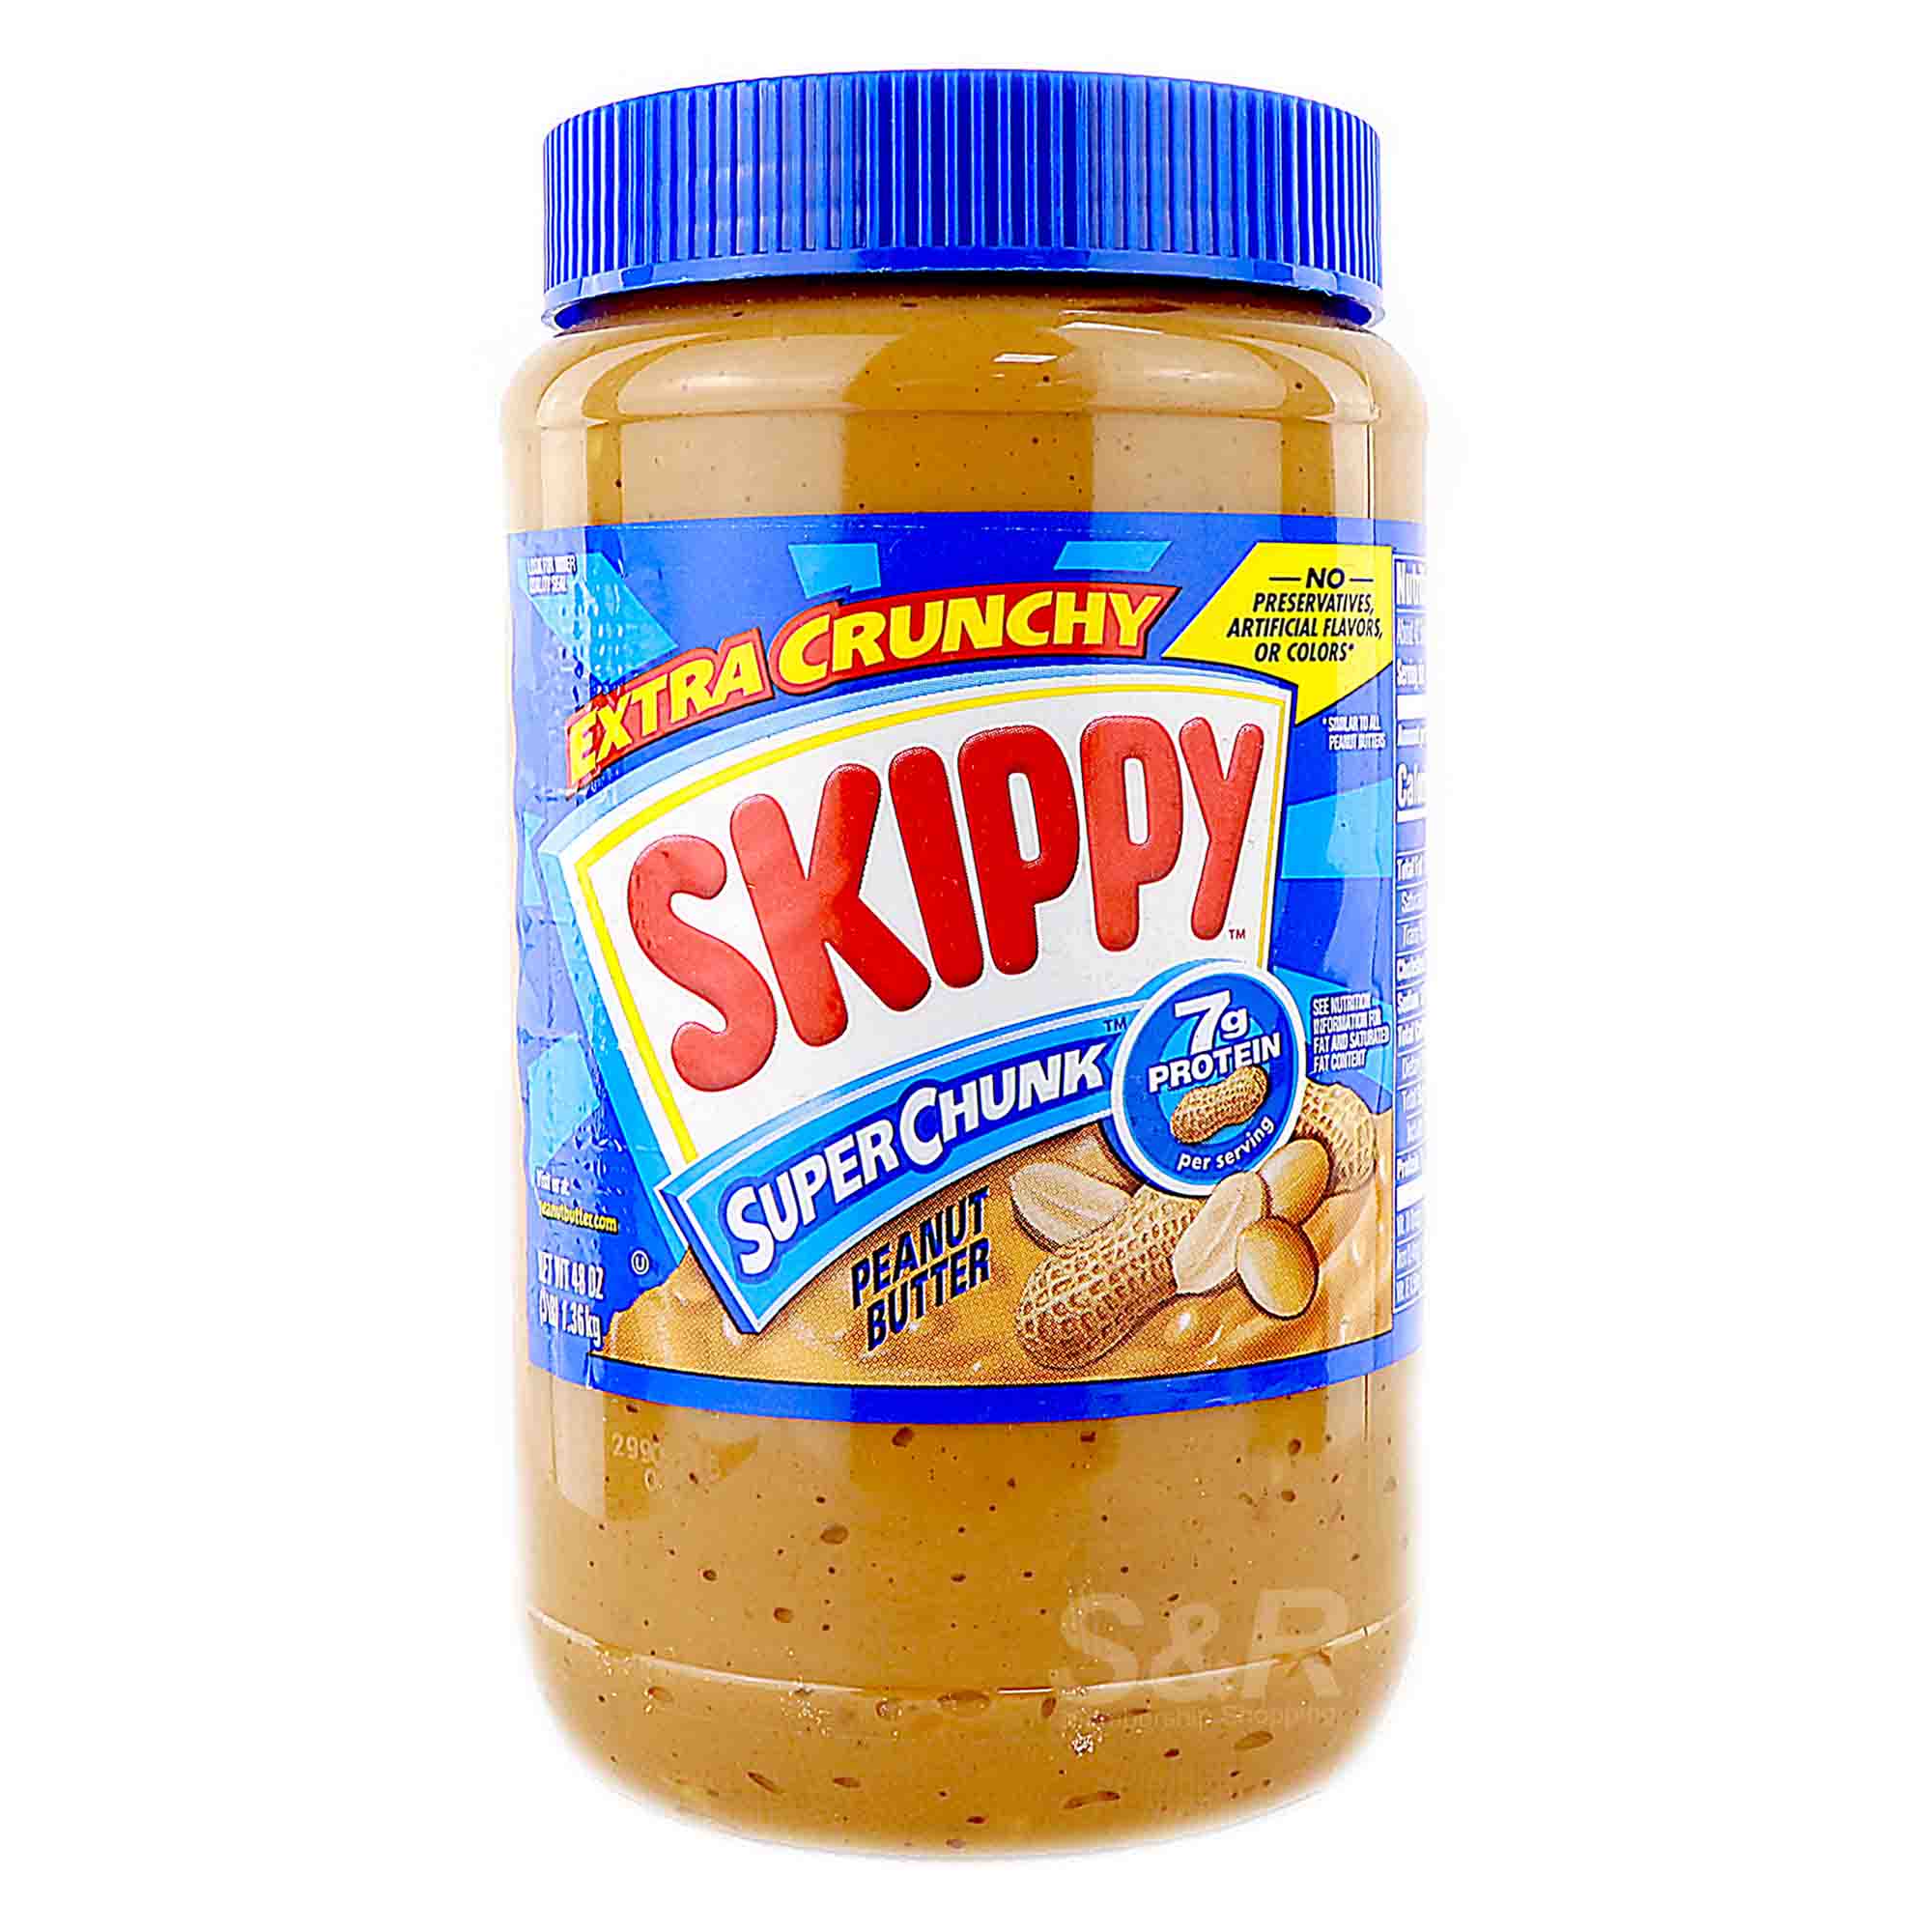 SUPER CHUNK® Peanut Butter - Skippy® Brand Peanut Butter